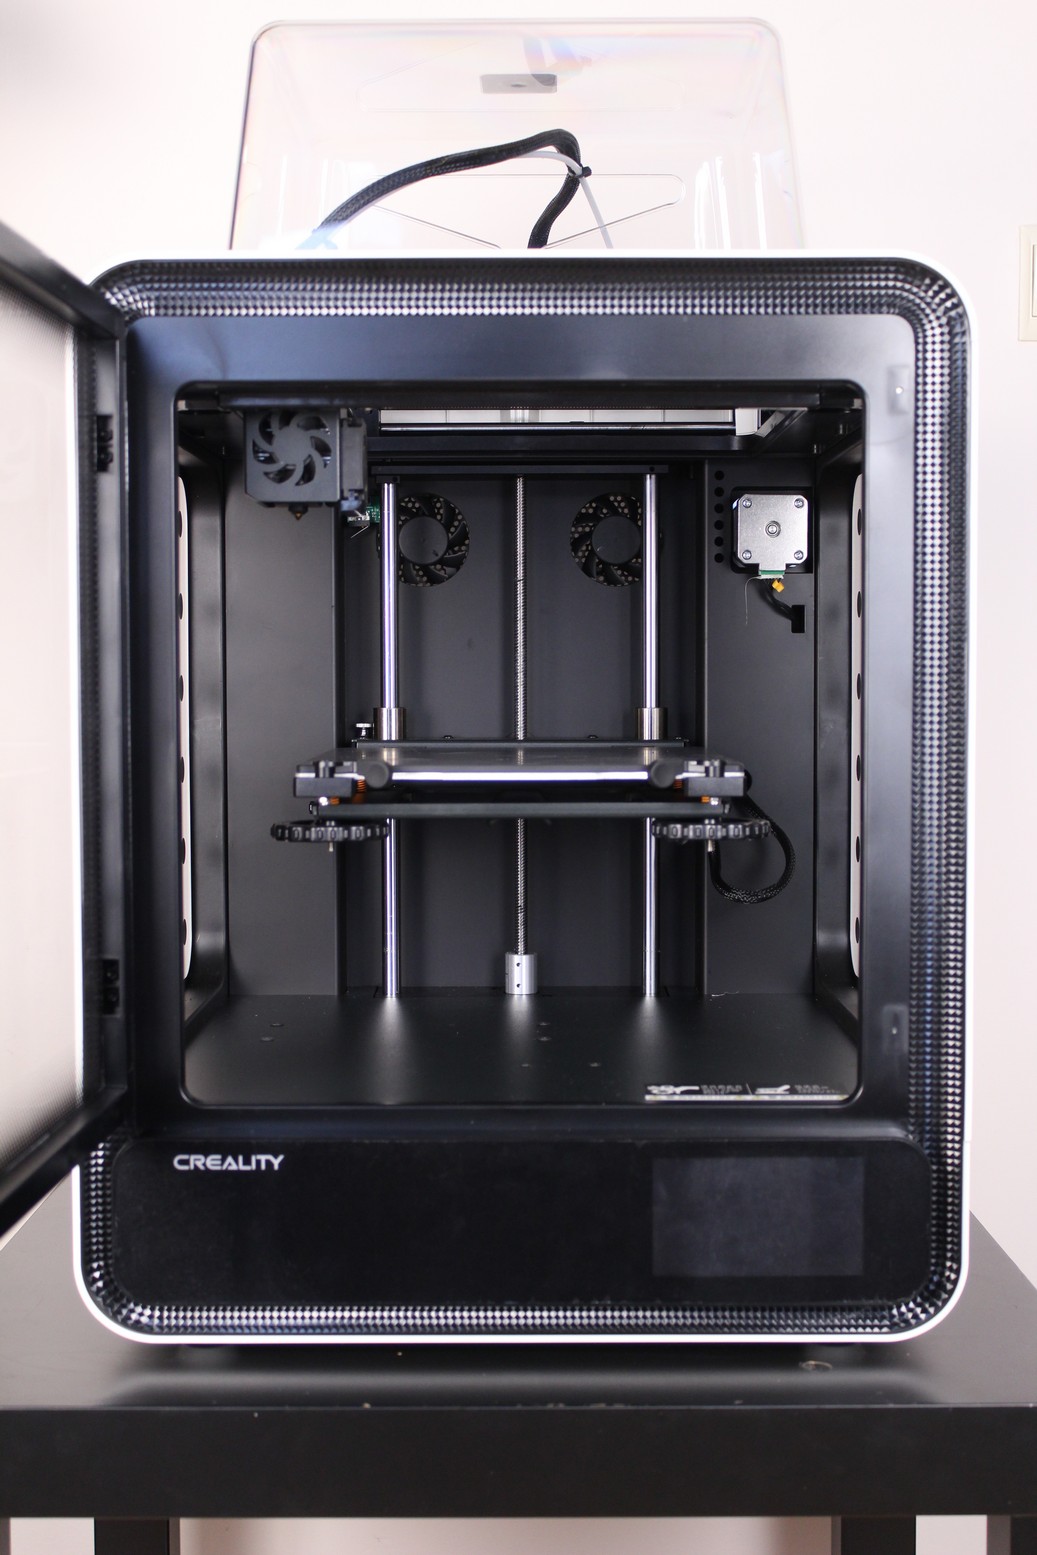 Creality CR 200B review Design 3 | Creality CR-200B Review: Budget Enclosed 3D Printer